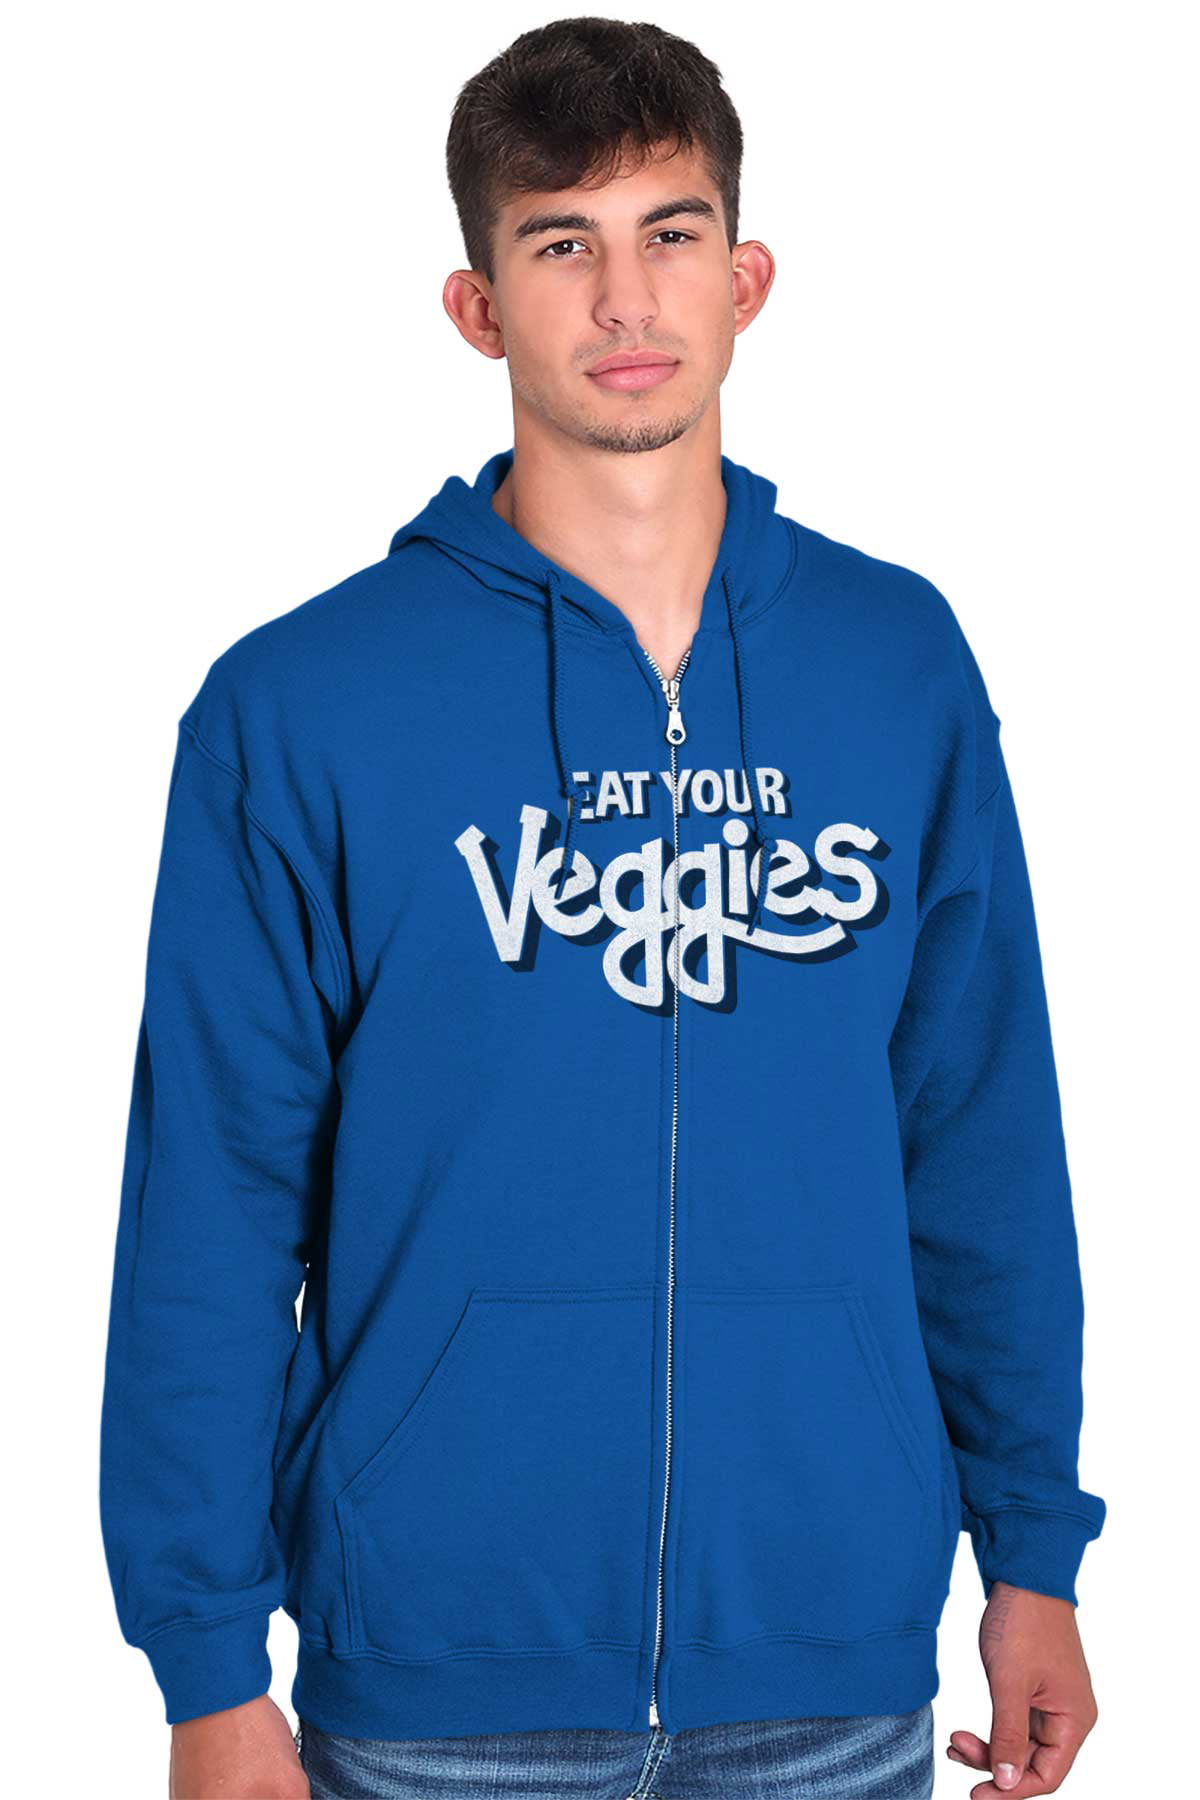 Vegan Veggie Healthy Lifestyle Vegetarian Hoodies Sweat Shirts Sweatshirts 